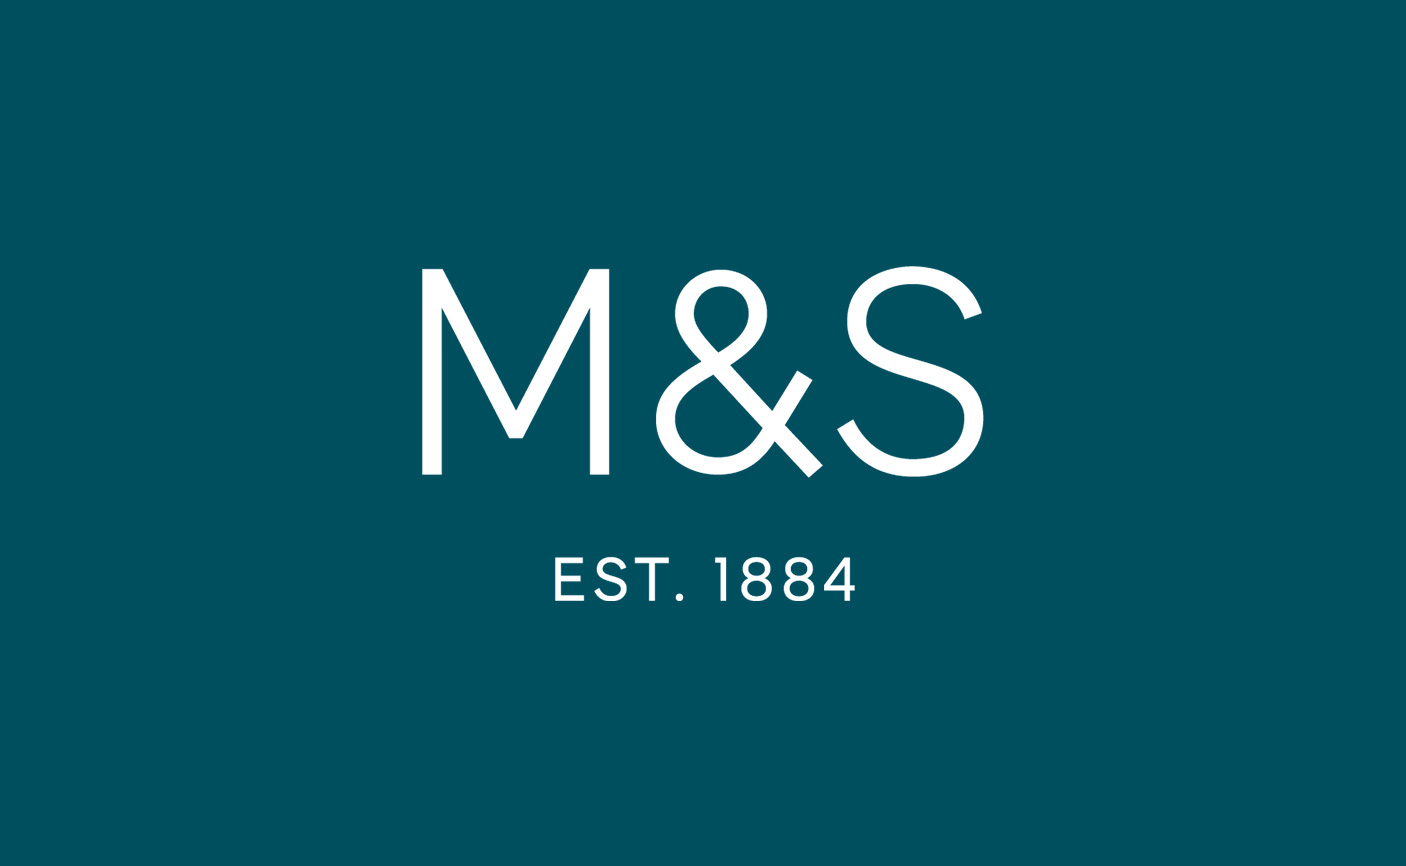 Marks & Spencer - customer testimonial and customer reference